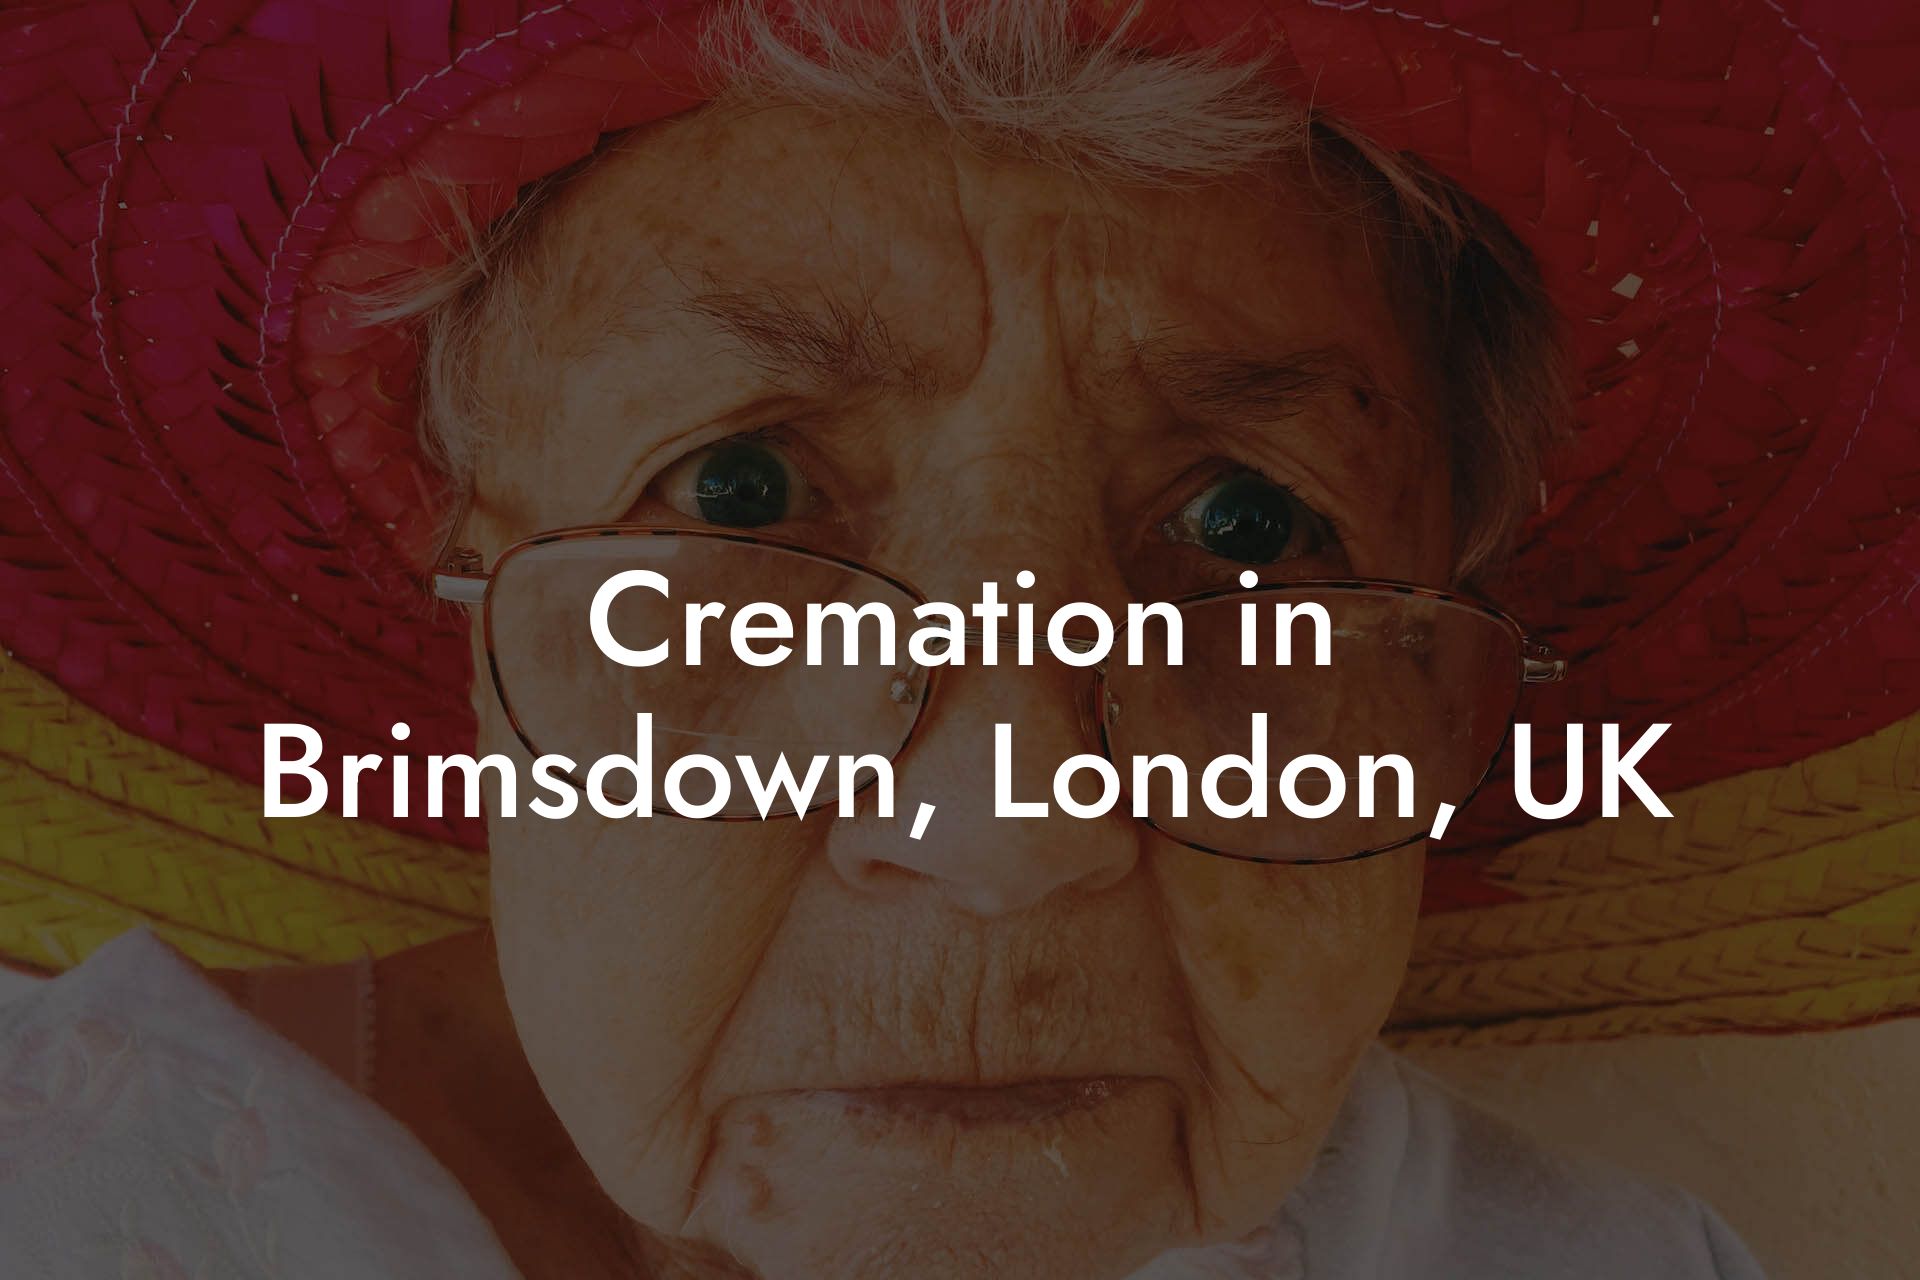 Cremation in Brimsdown, London, UK